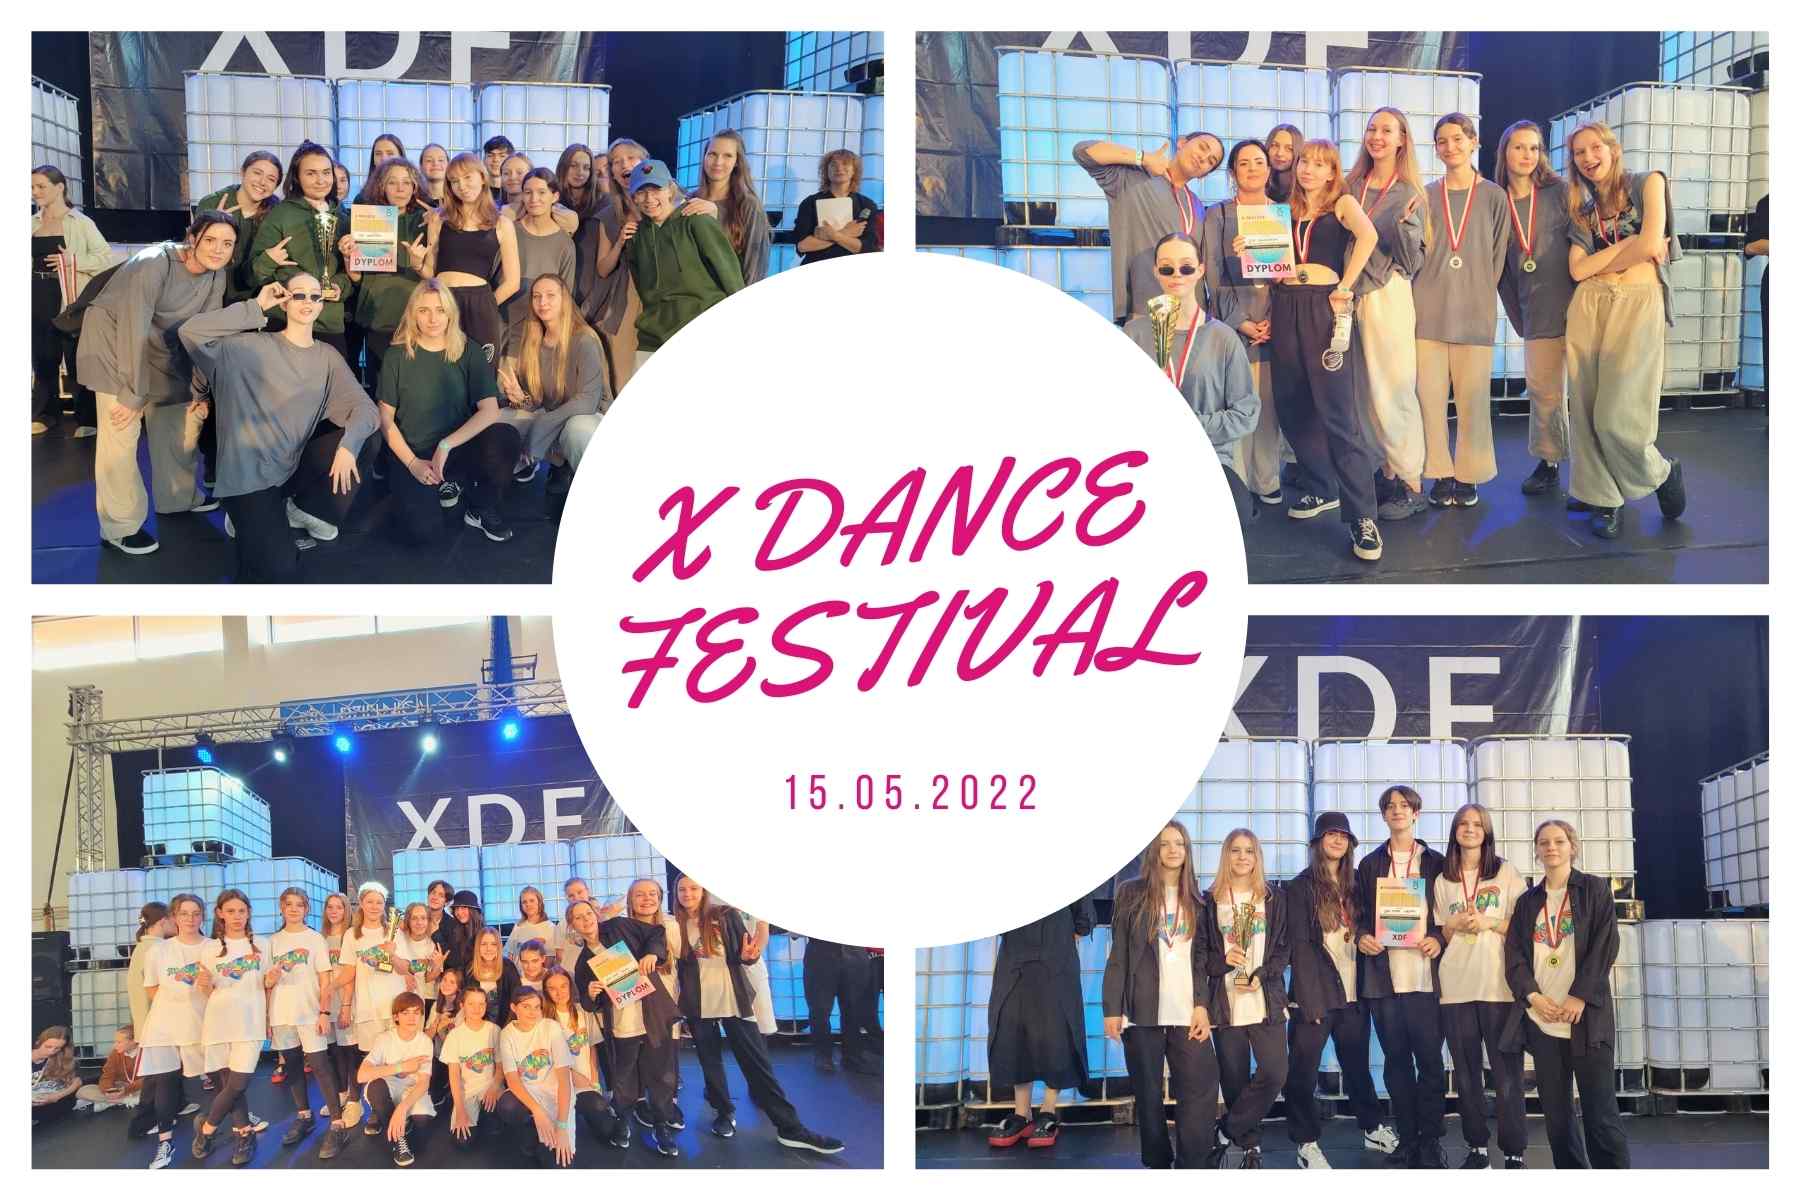 xdance festival 2022